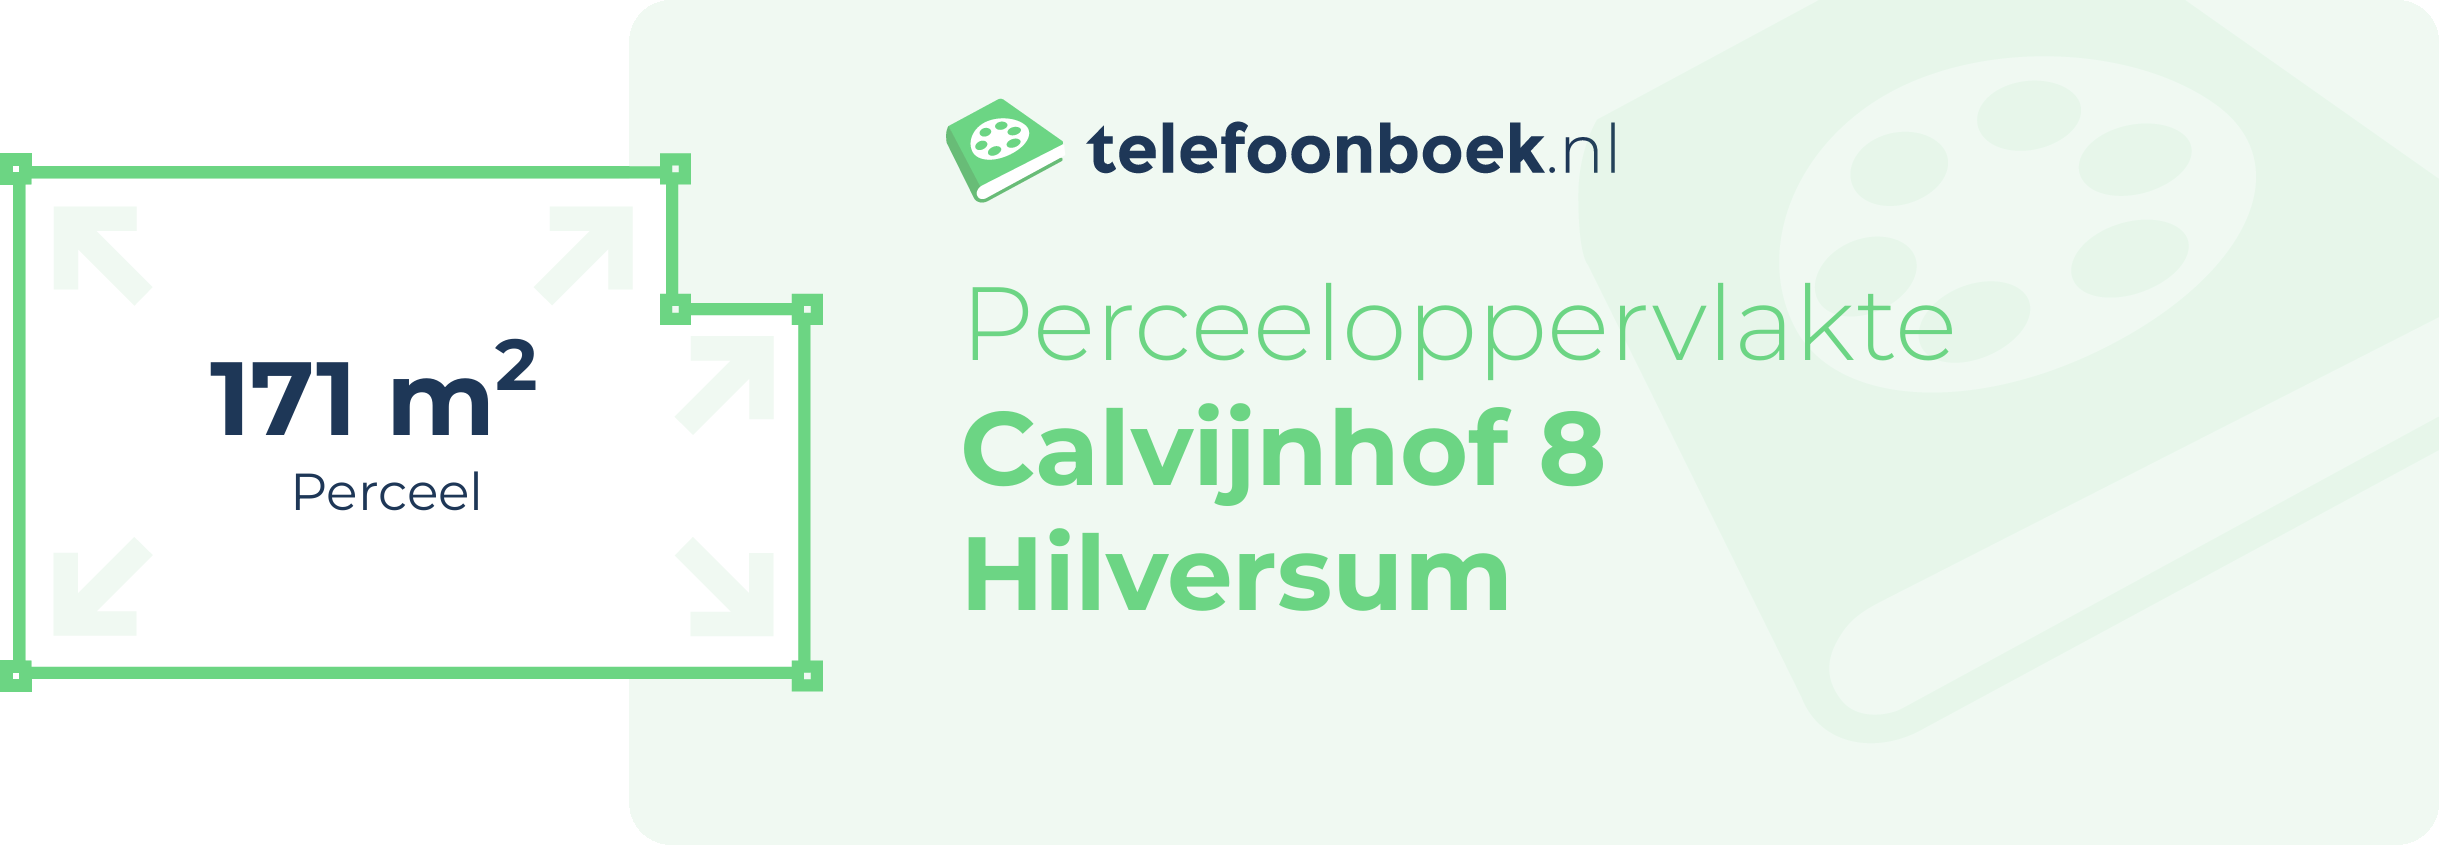 Perceeloppervlakte Calvijnhof 8 Hilversum